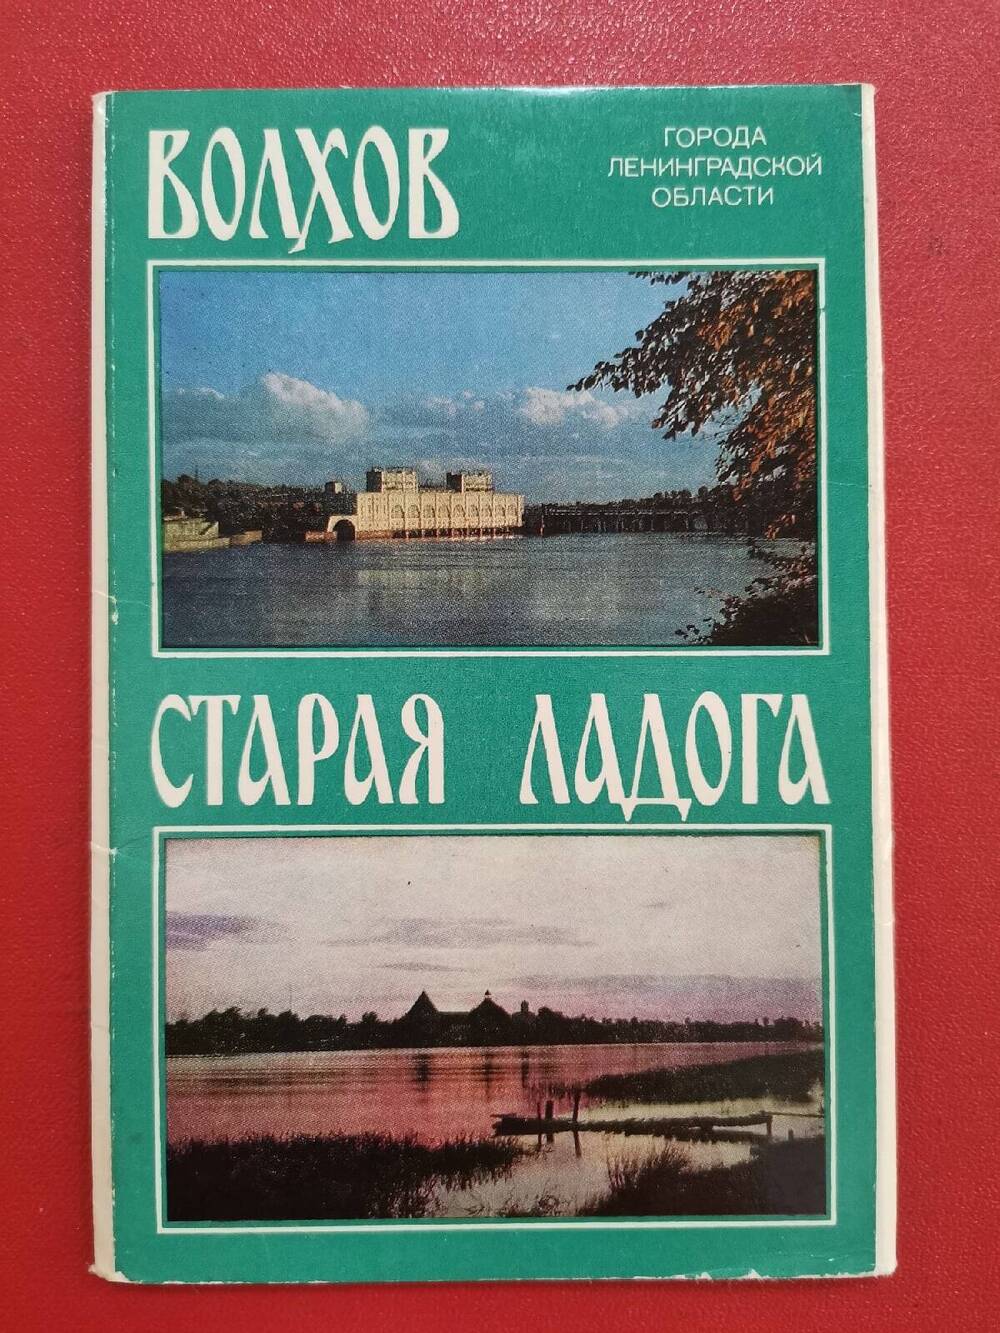 Обложка от набора открыток «Волхов. Старая Ладога».